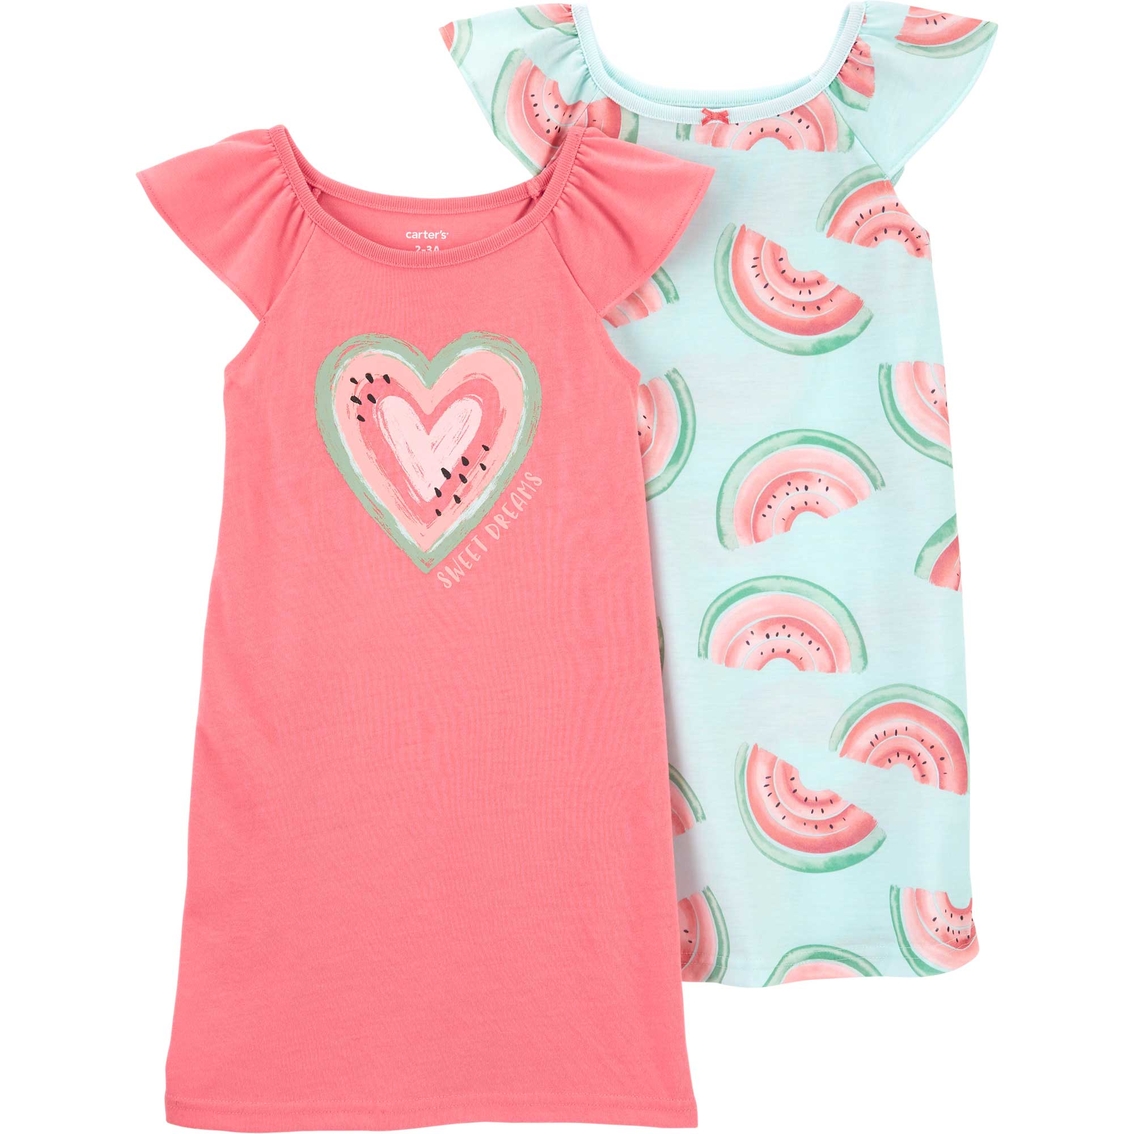 Carter's Toddler Girls Nightgowns 2 Pk. | Toddler Girls 2t-5t ...